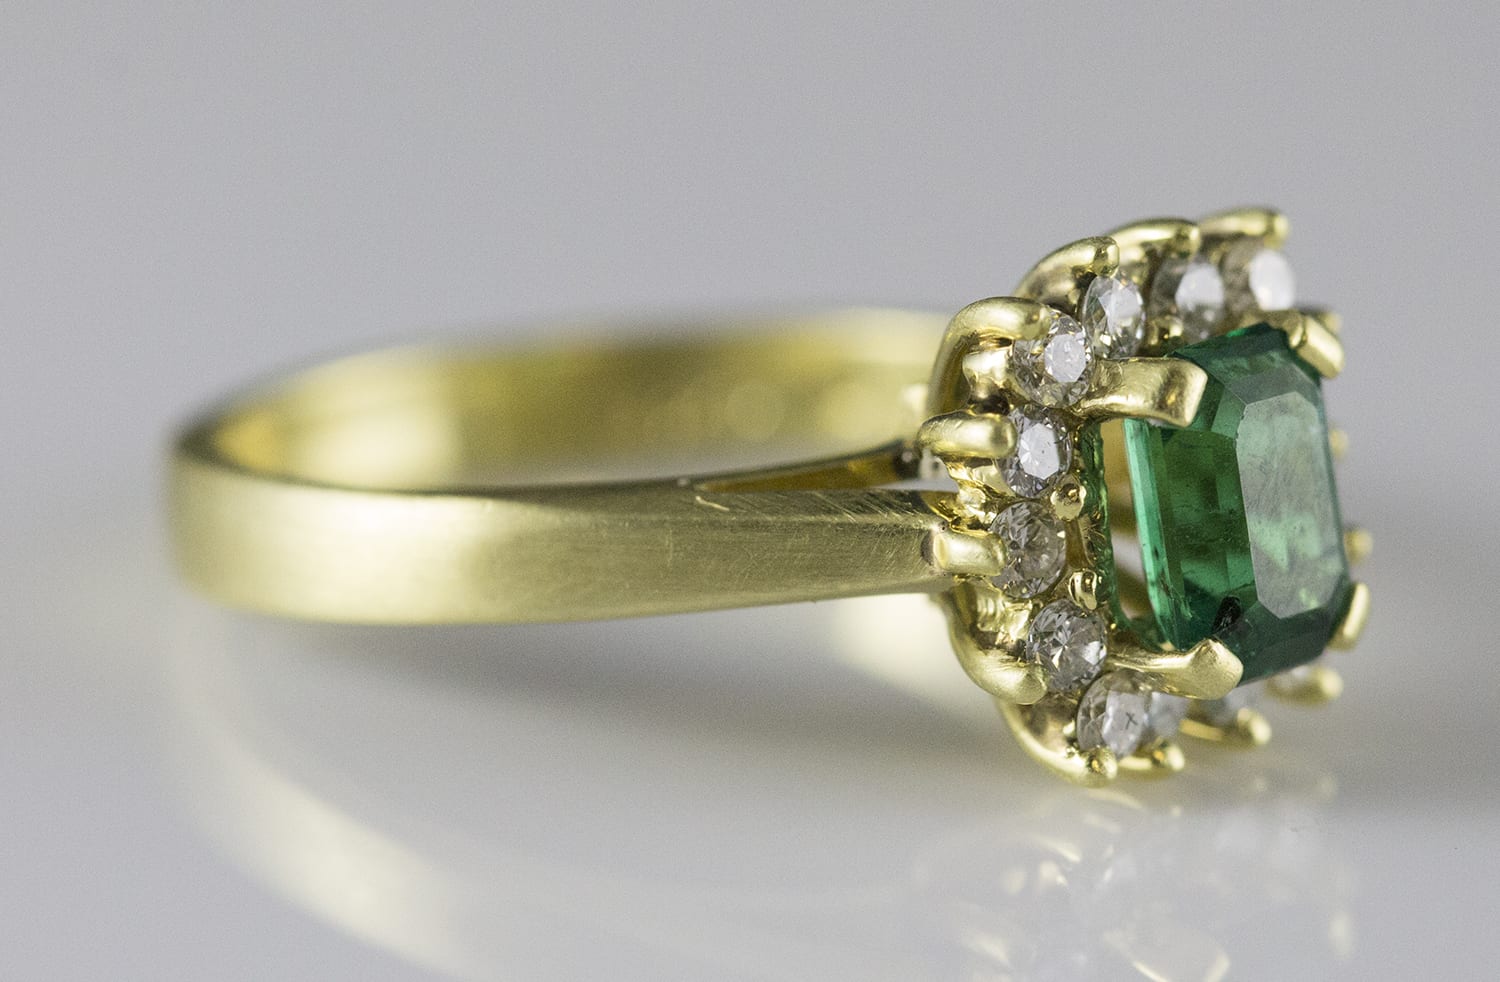 1.62 Emerald 3 stone Deep Green  Emerald CZ VVS1 Promise Bridal Wedding Engagement Classic Designer Ring Solid 14k Yellow Gold